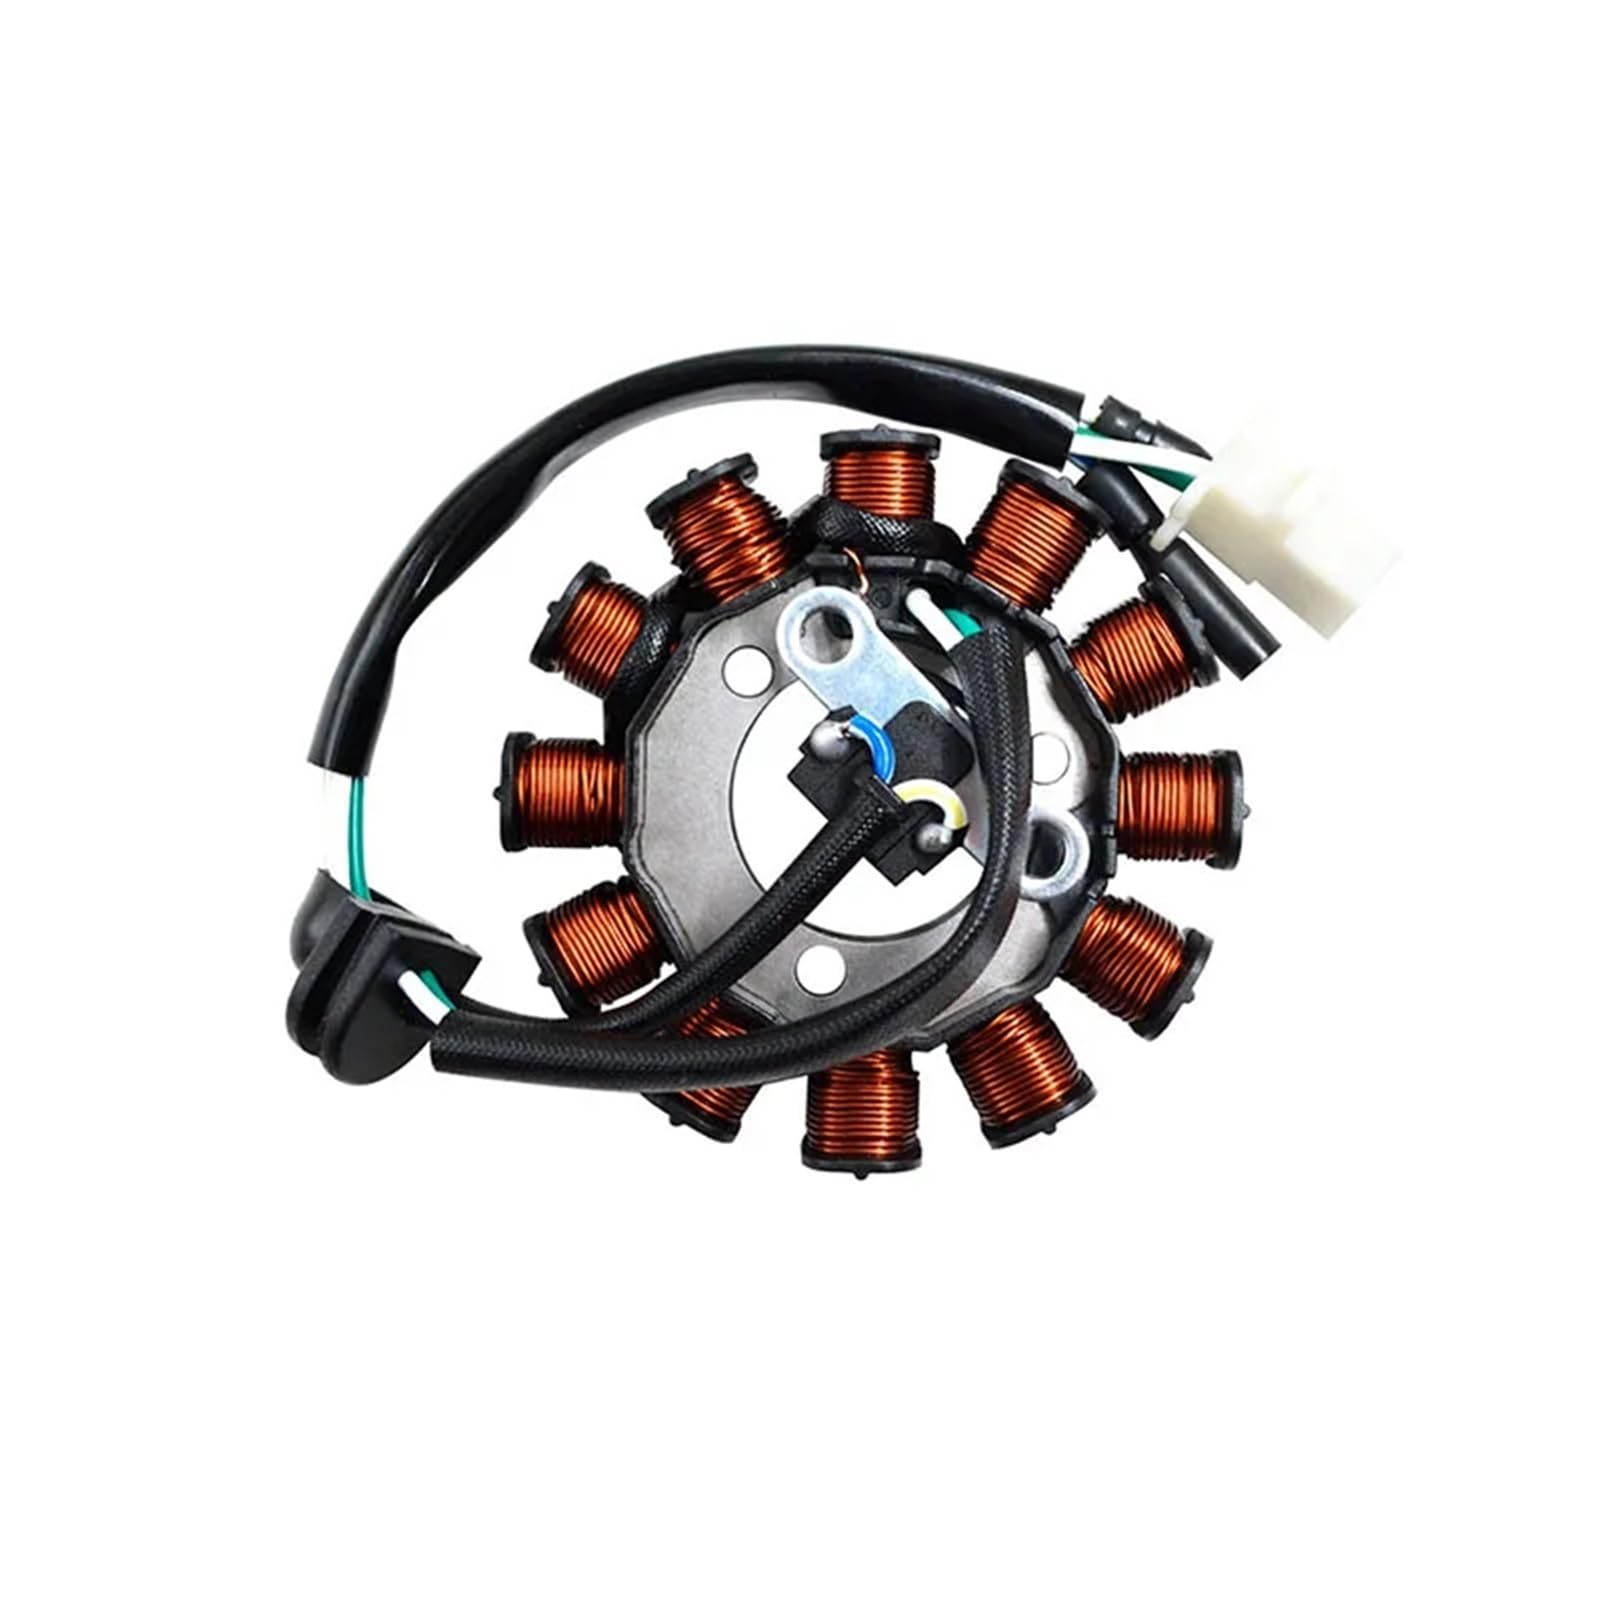 Spule Motorrad Magneto Stator Für CBF125 2008-2015 31120-KWF-941 Zubehör Großhandel Motorrad Generator Stator Spule Magnet-Stator-Spule von WINVOX